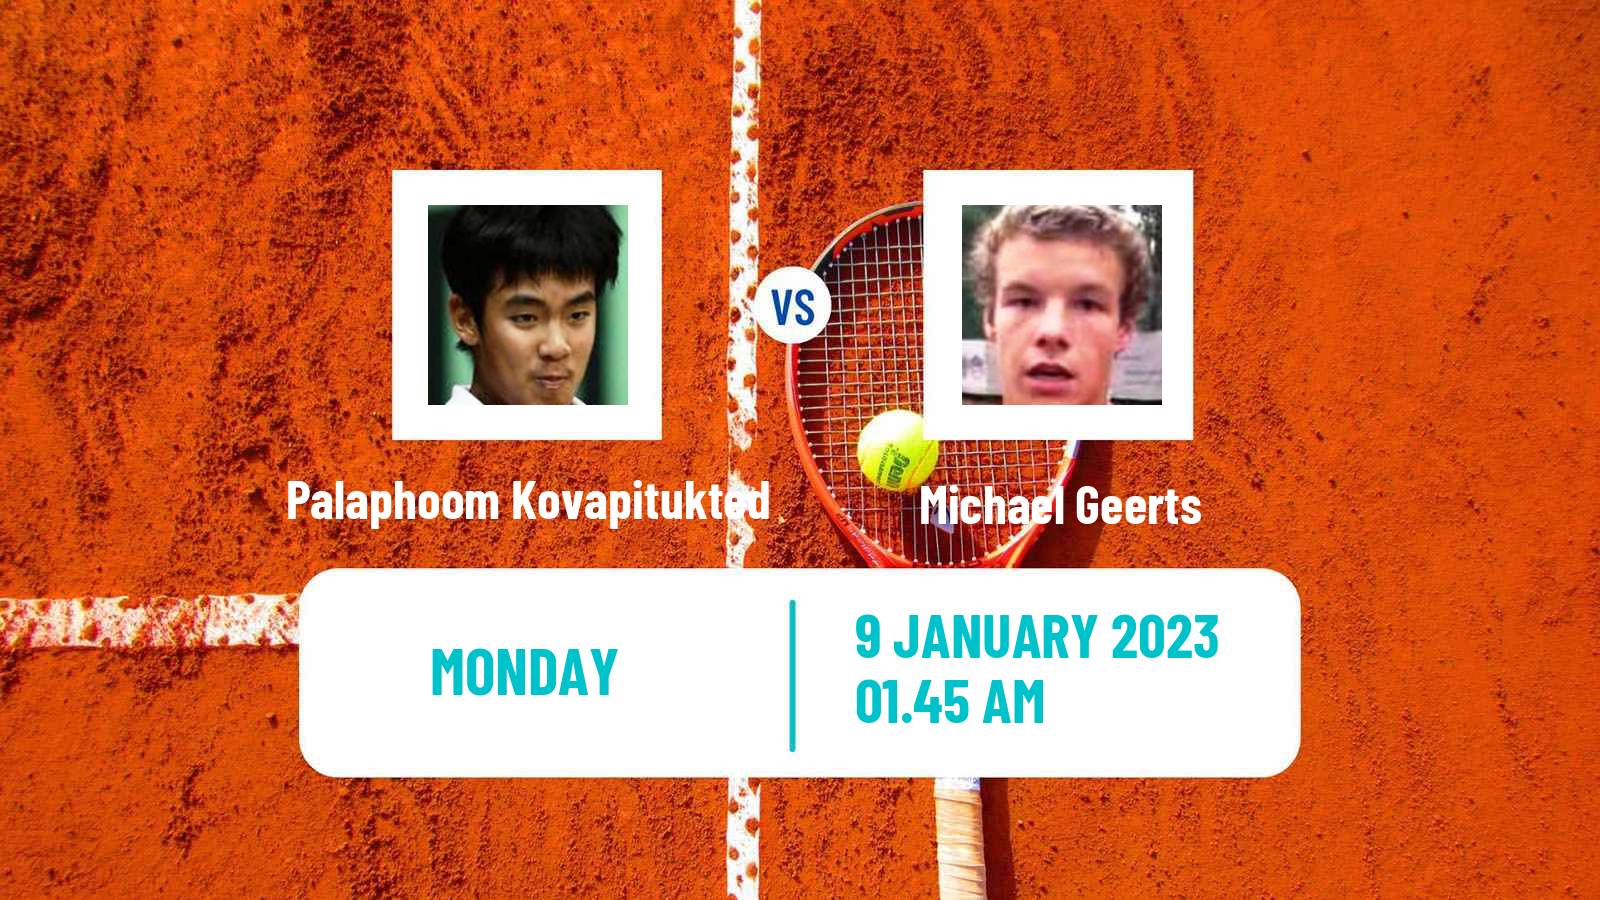 Tennis ATP Challenger Palaphoom Kovapitukted - Michael Geerts